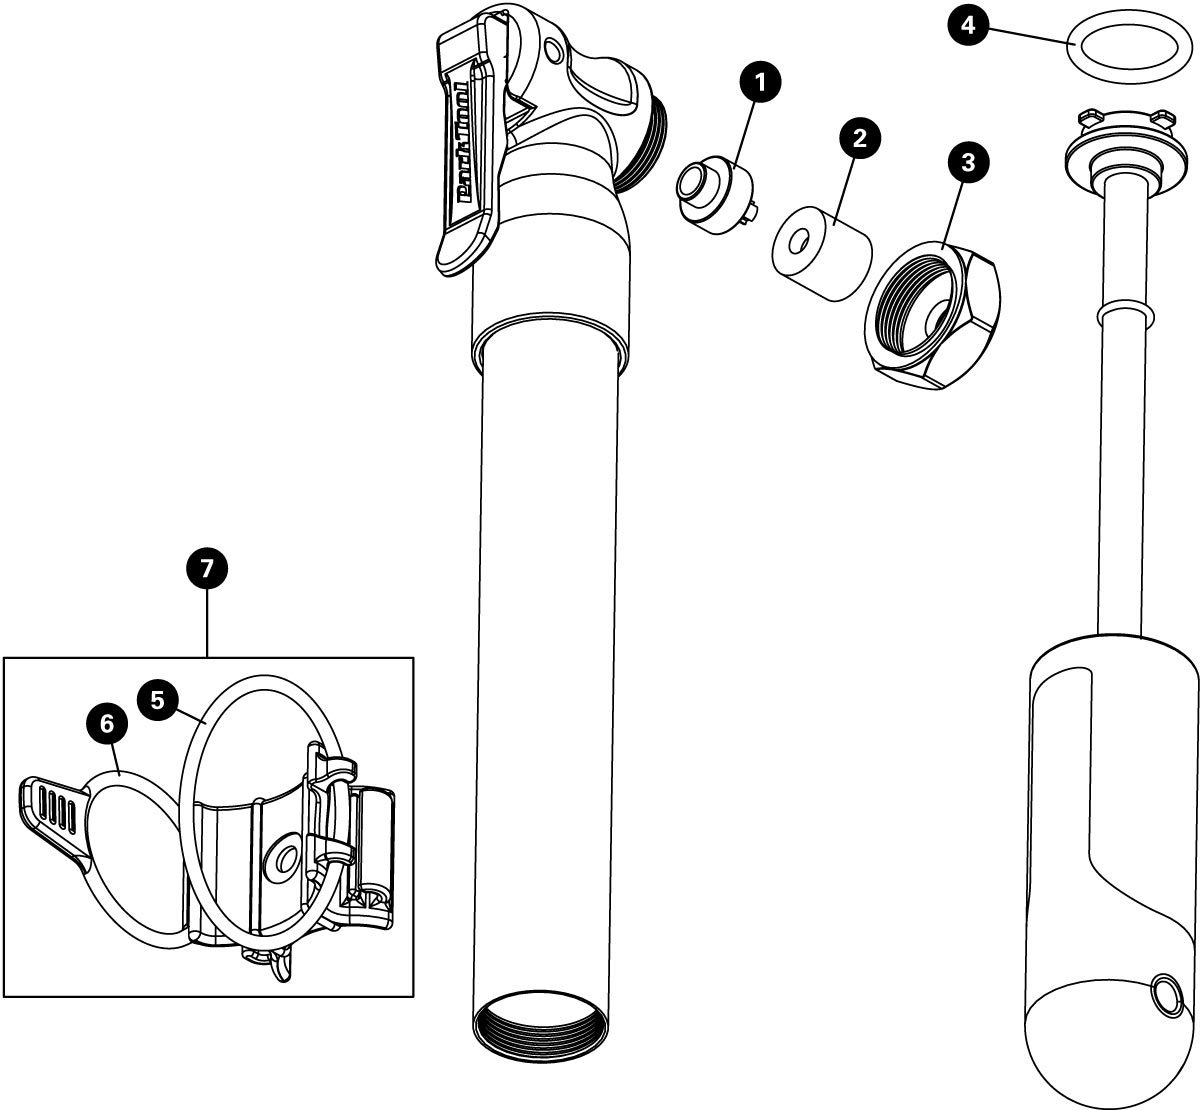 Parts diagram for PMP-4.2 Mini Pump, click to enlarge